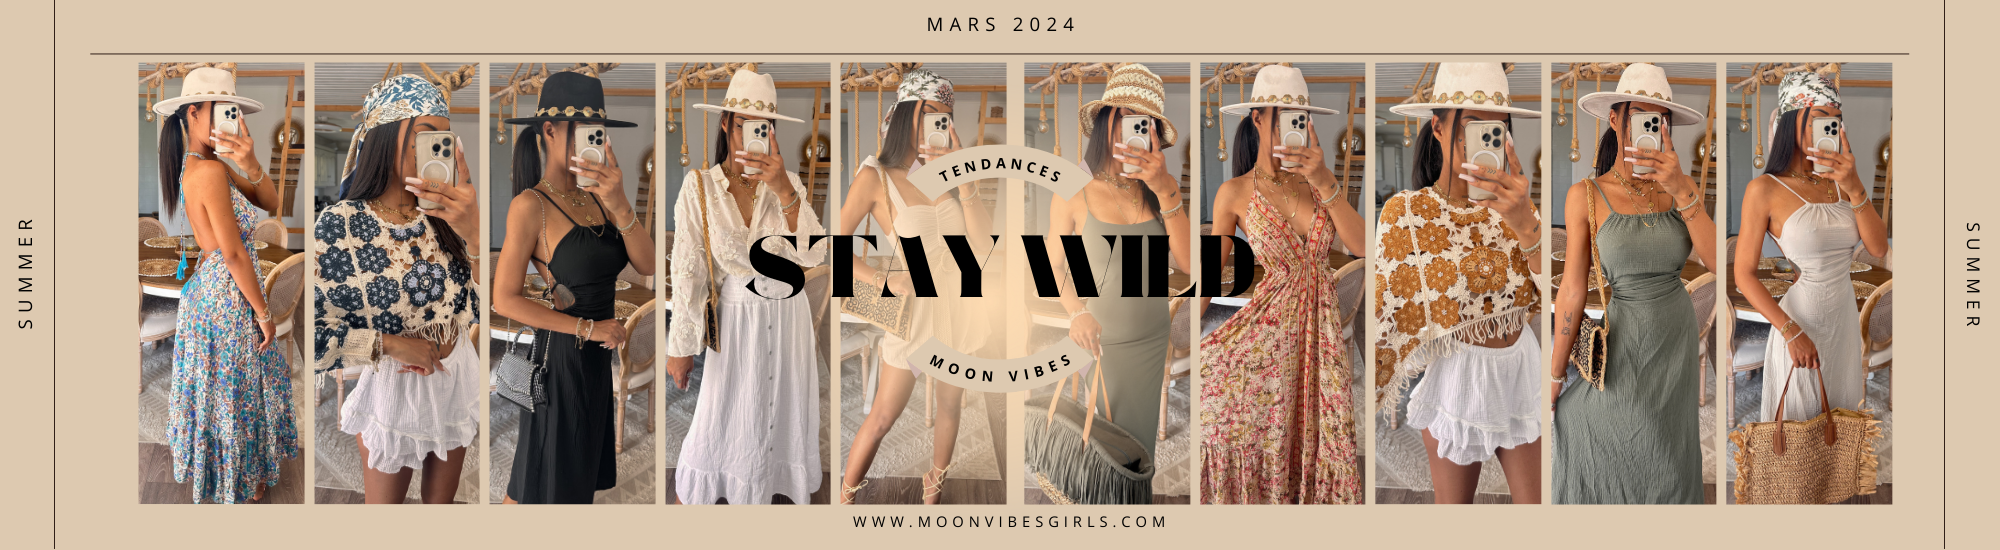 brown minimalist fashion summer moodboard blog banner 2000 x 550 px